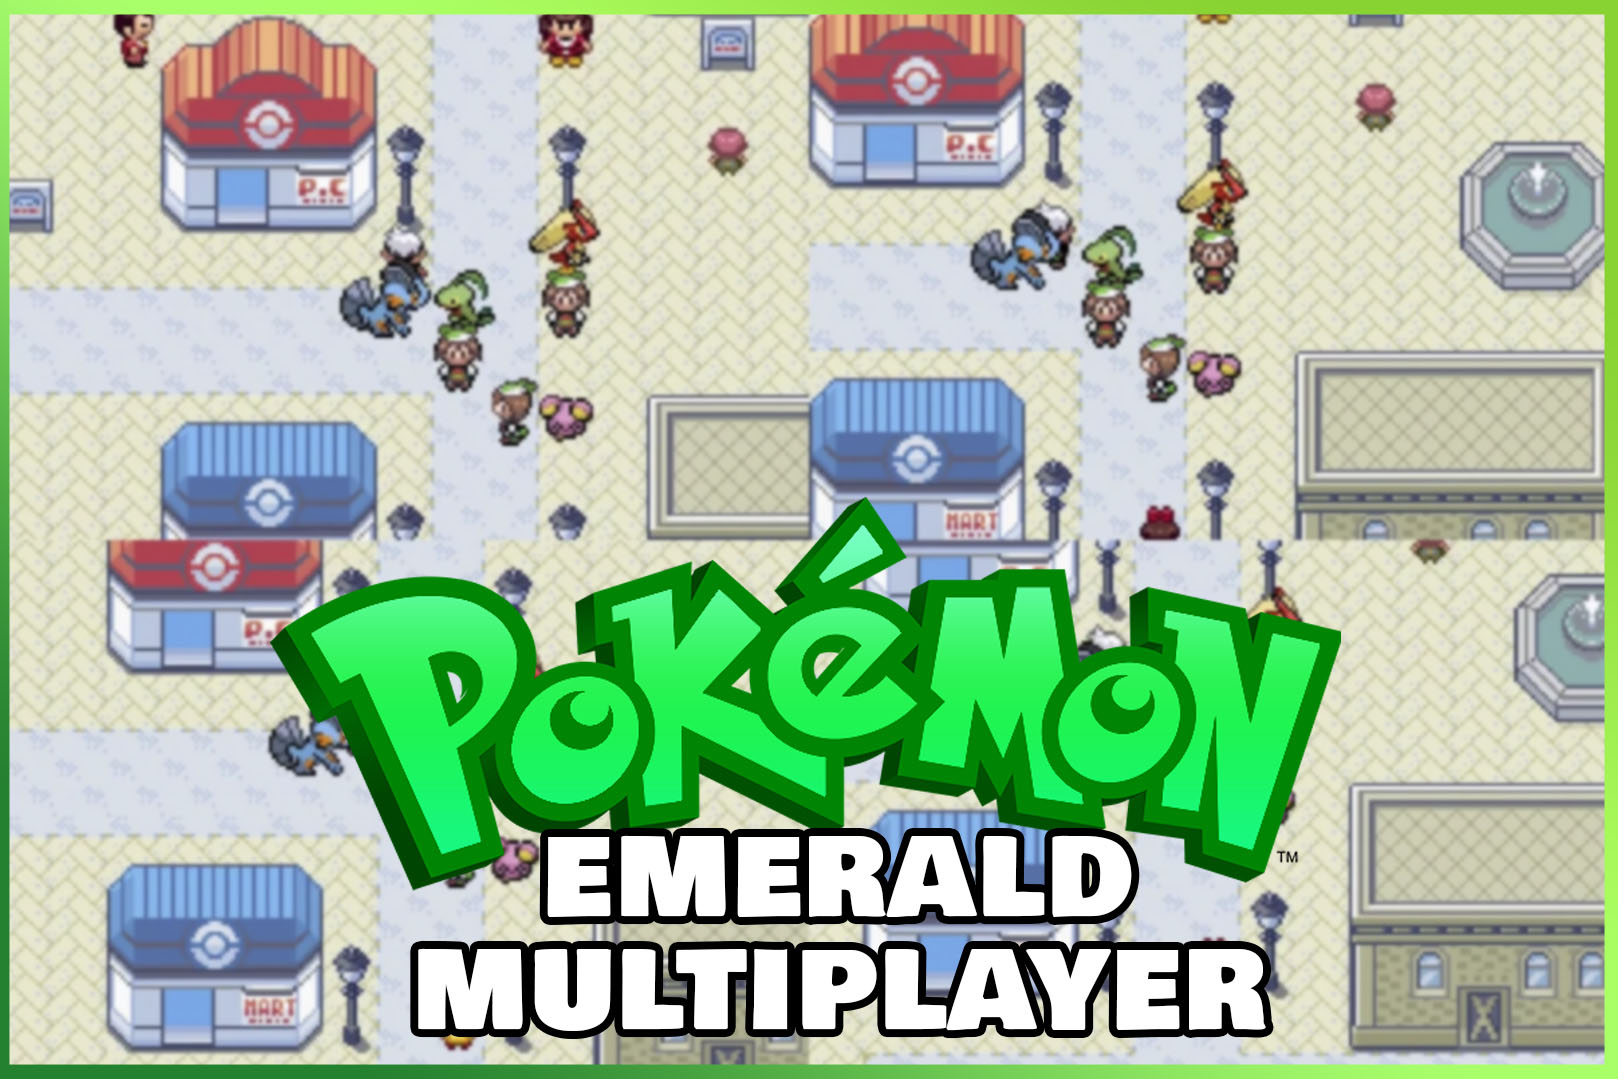 Pokemon Emerald Multiplayer Alpha 4.2 